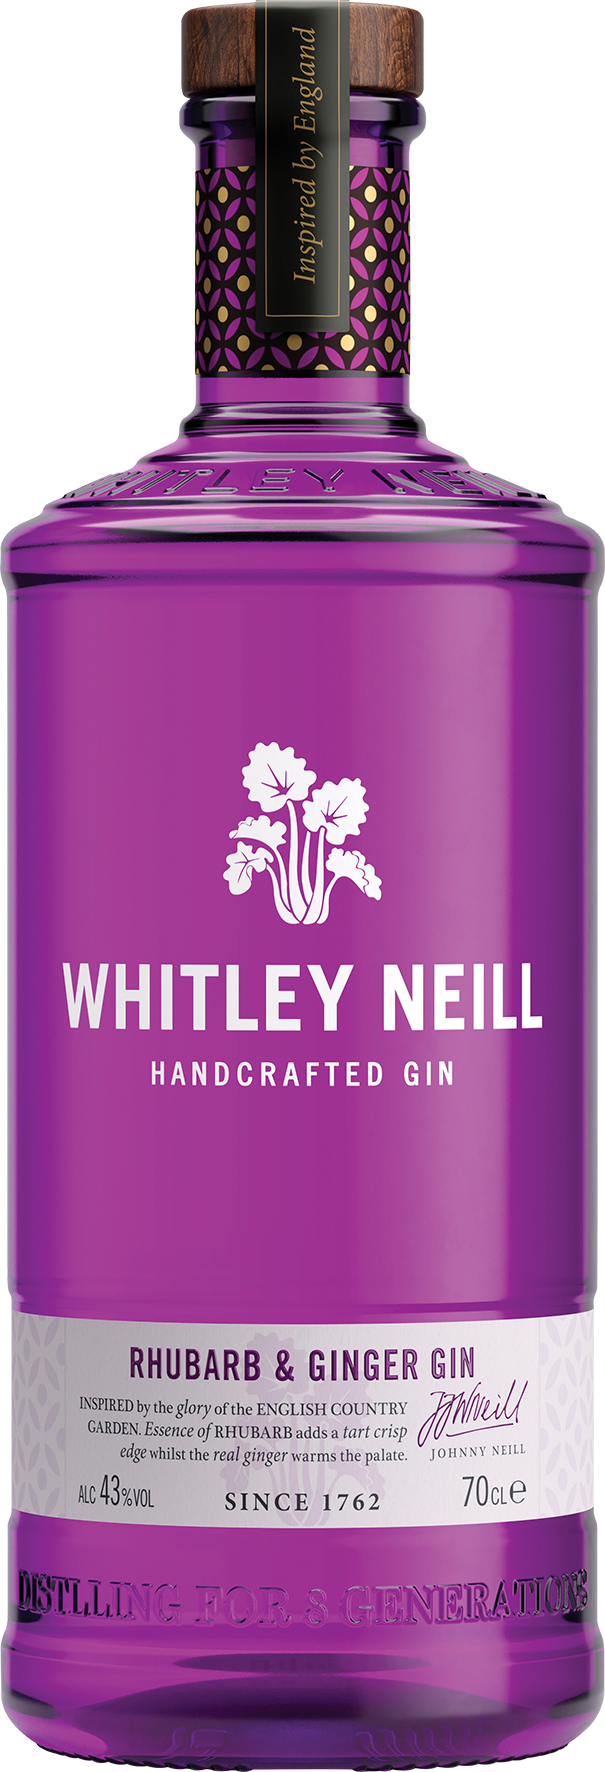 Whitley Neill Rhubarb & Ginger Gin Halewood